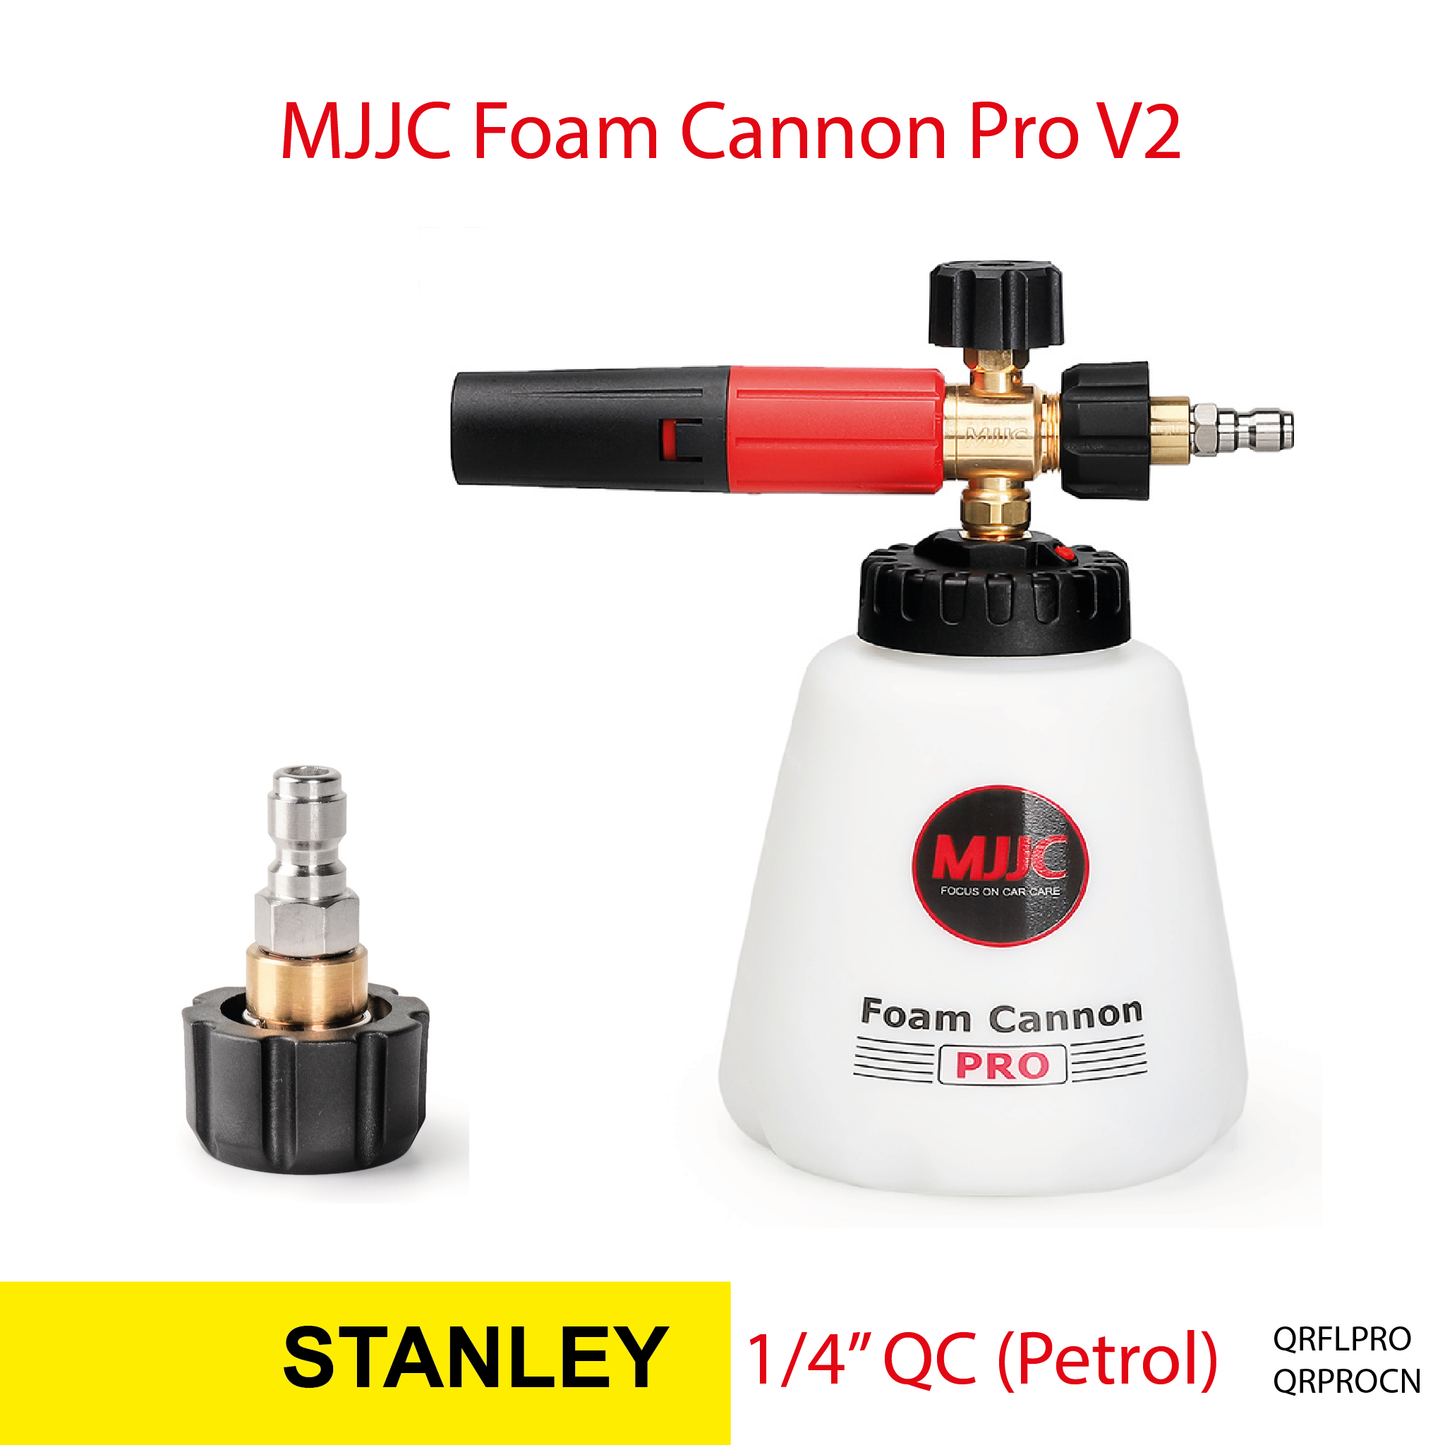 Stanley pressure washer - MJJC Foam Cannon Pro V2 (Pressure Washer Snow Foam Lance Gun)